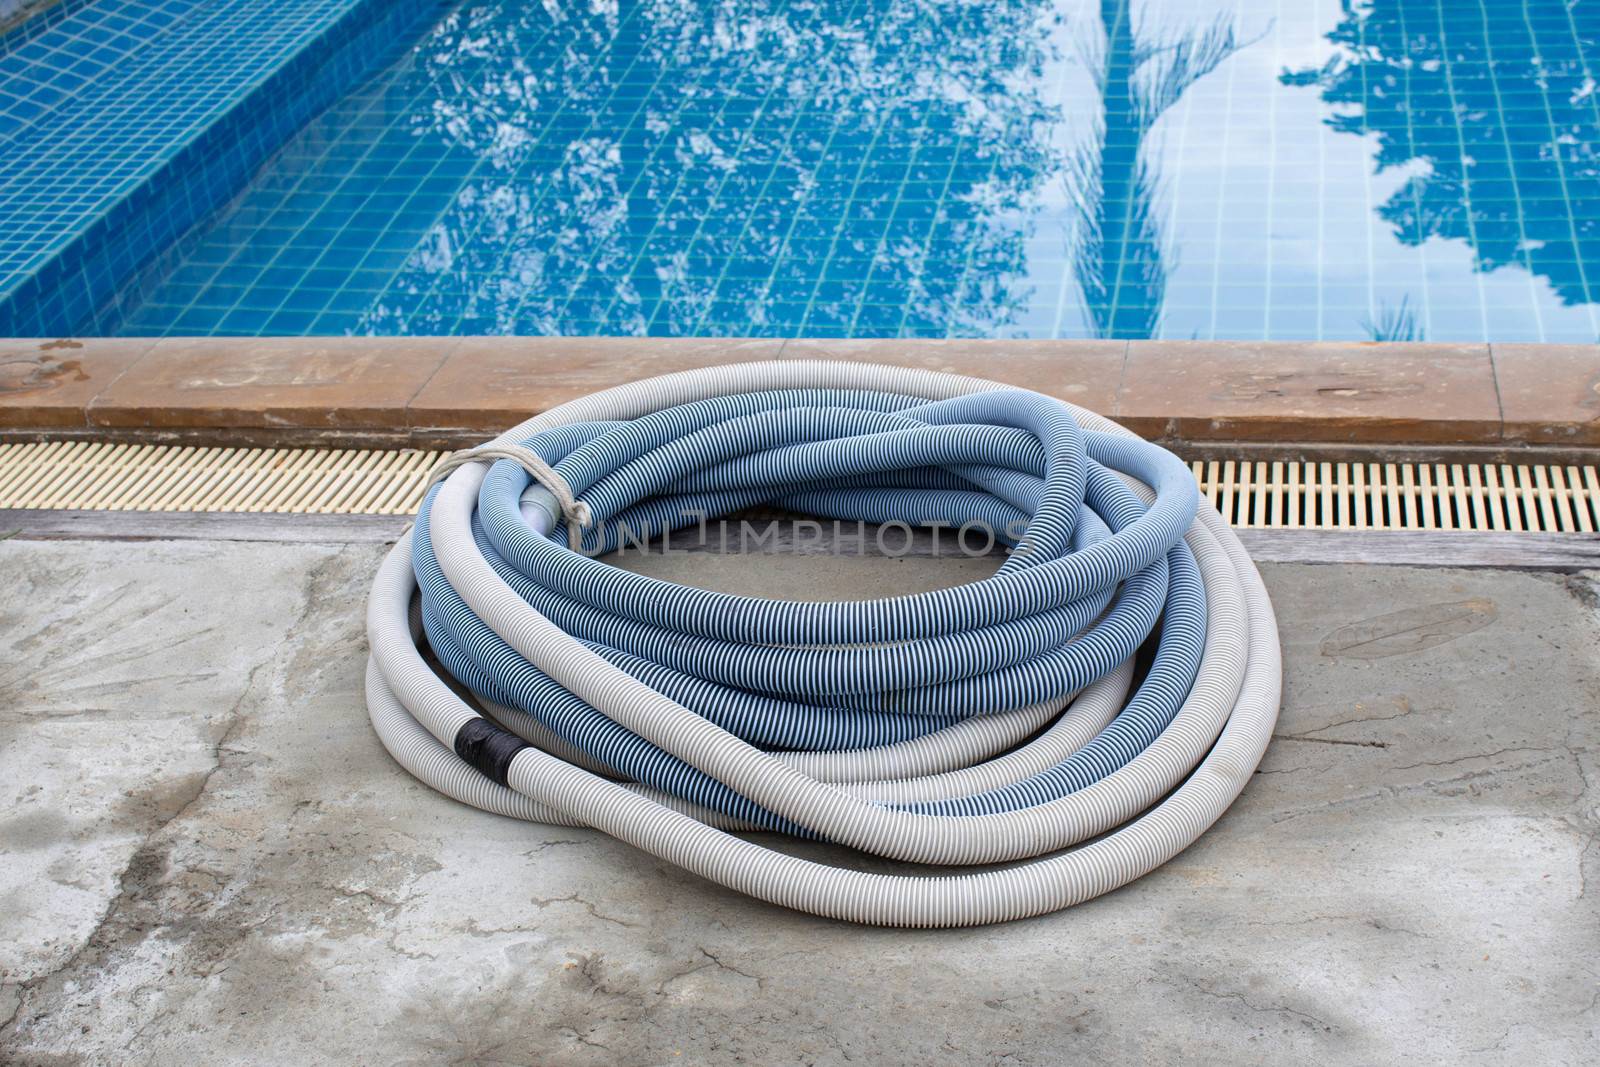 Swimming pool vacuum cleaner hose on cement floor, Manual equipment for cleaning pool. by TEERASAK